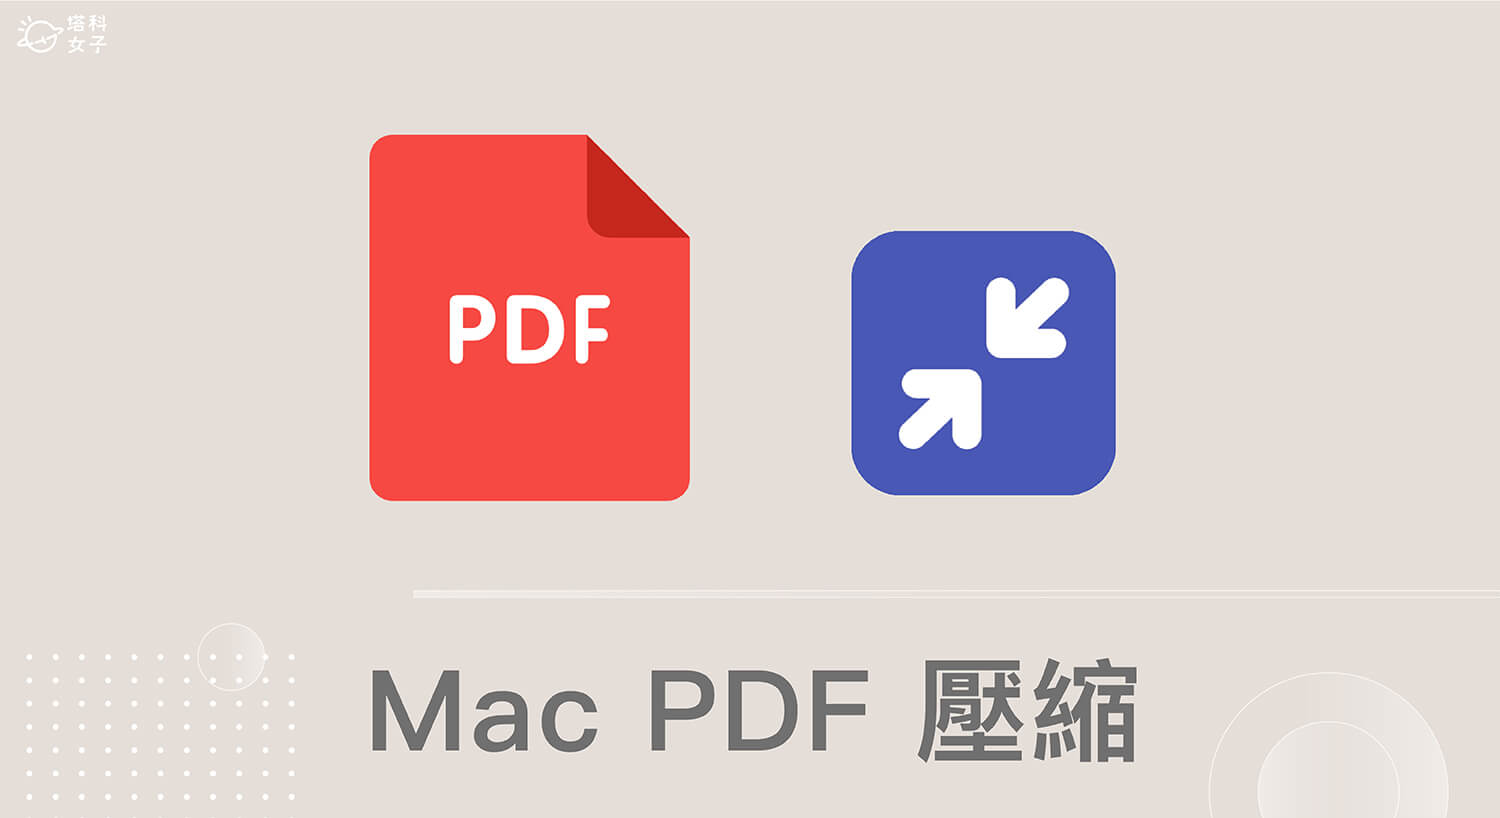 Mac PDF 壓縮教學，使用 macOS 內建「預覽程式」壓縮 PDF 檔案大小